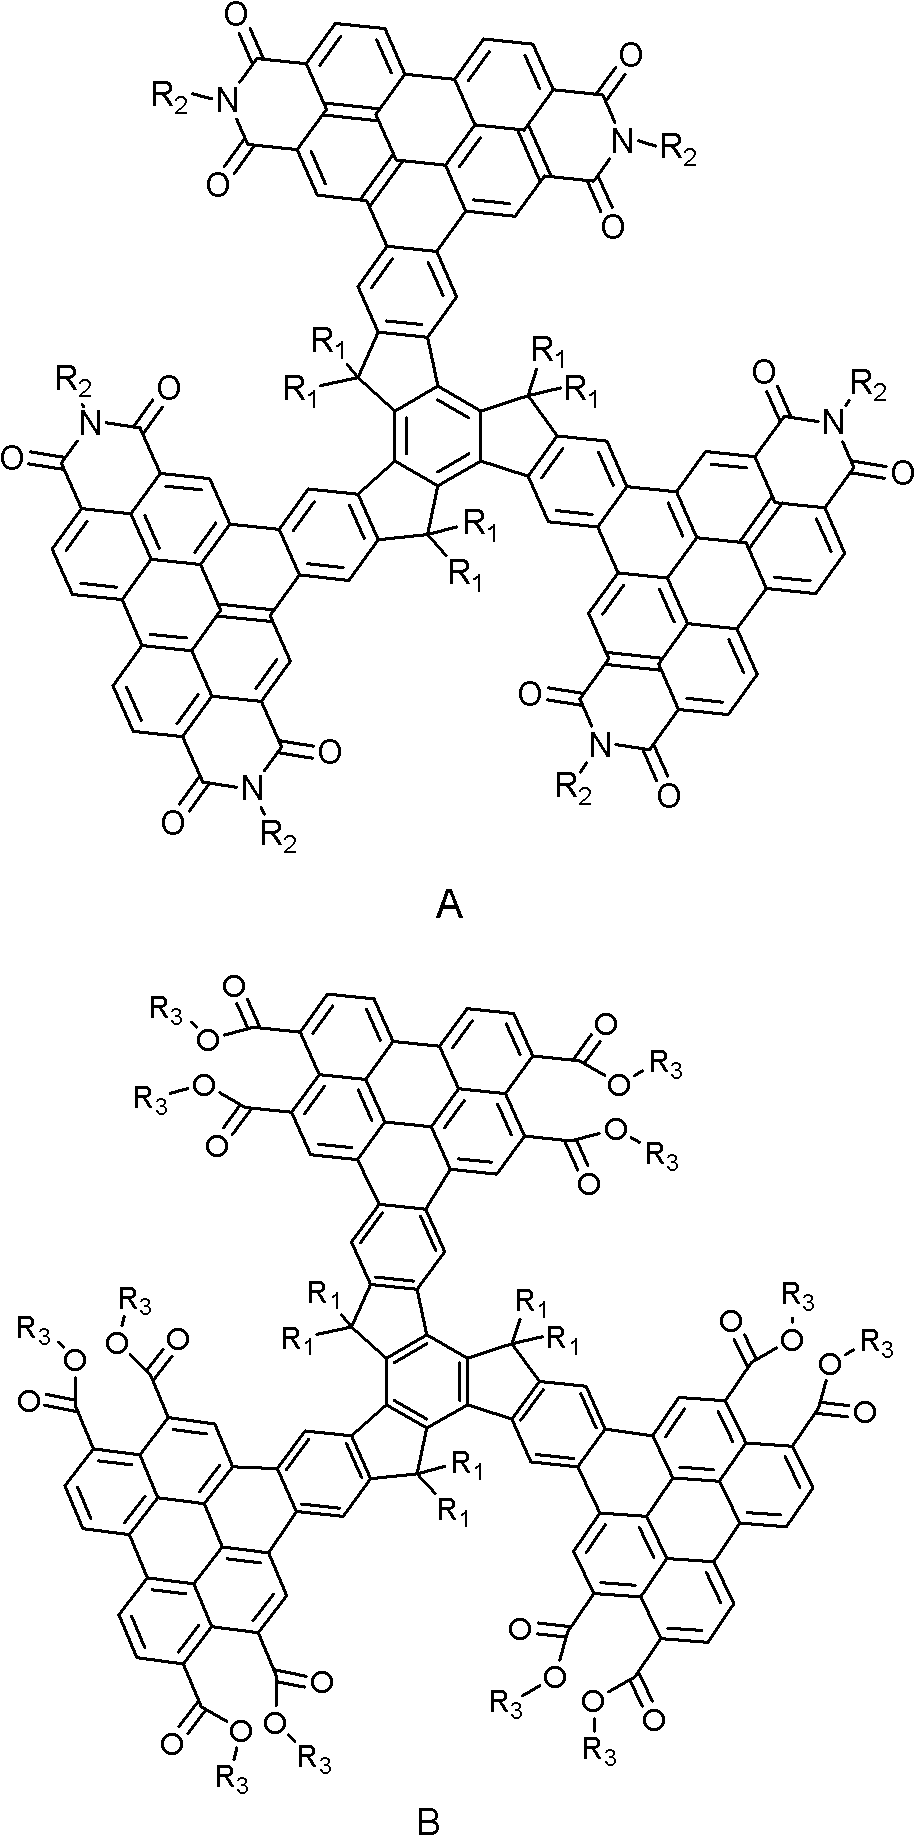 Star molecule of truxene-perylene-series derivative and preparation method thereof